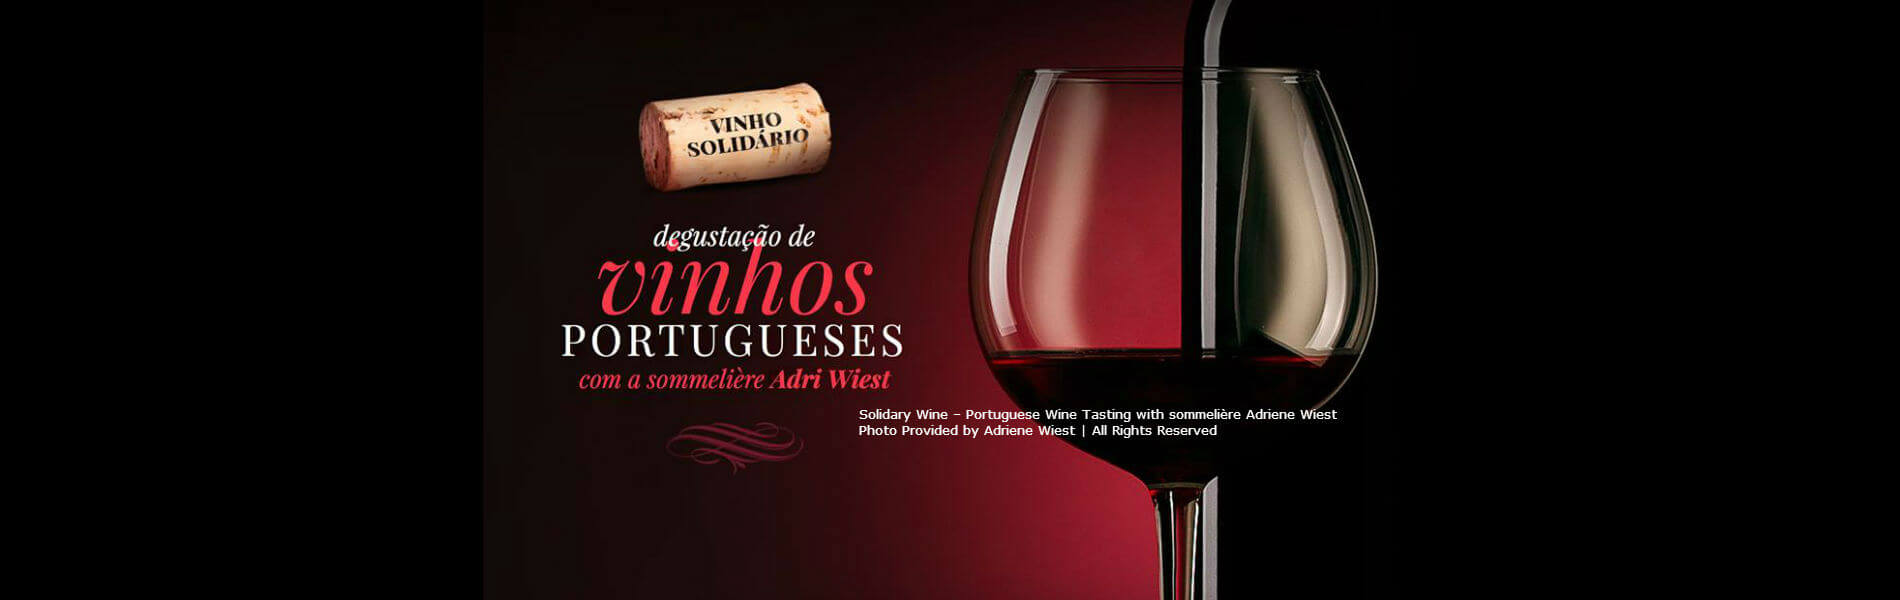 Blend-All-Blend-Wine-Portuguese wines support a social do in Brazil-Slider2